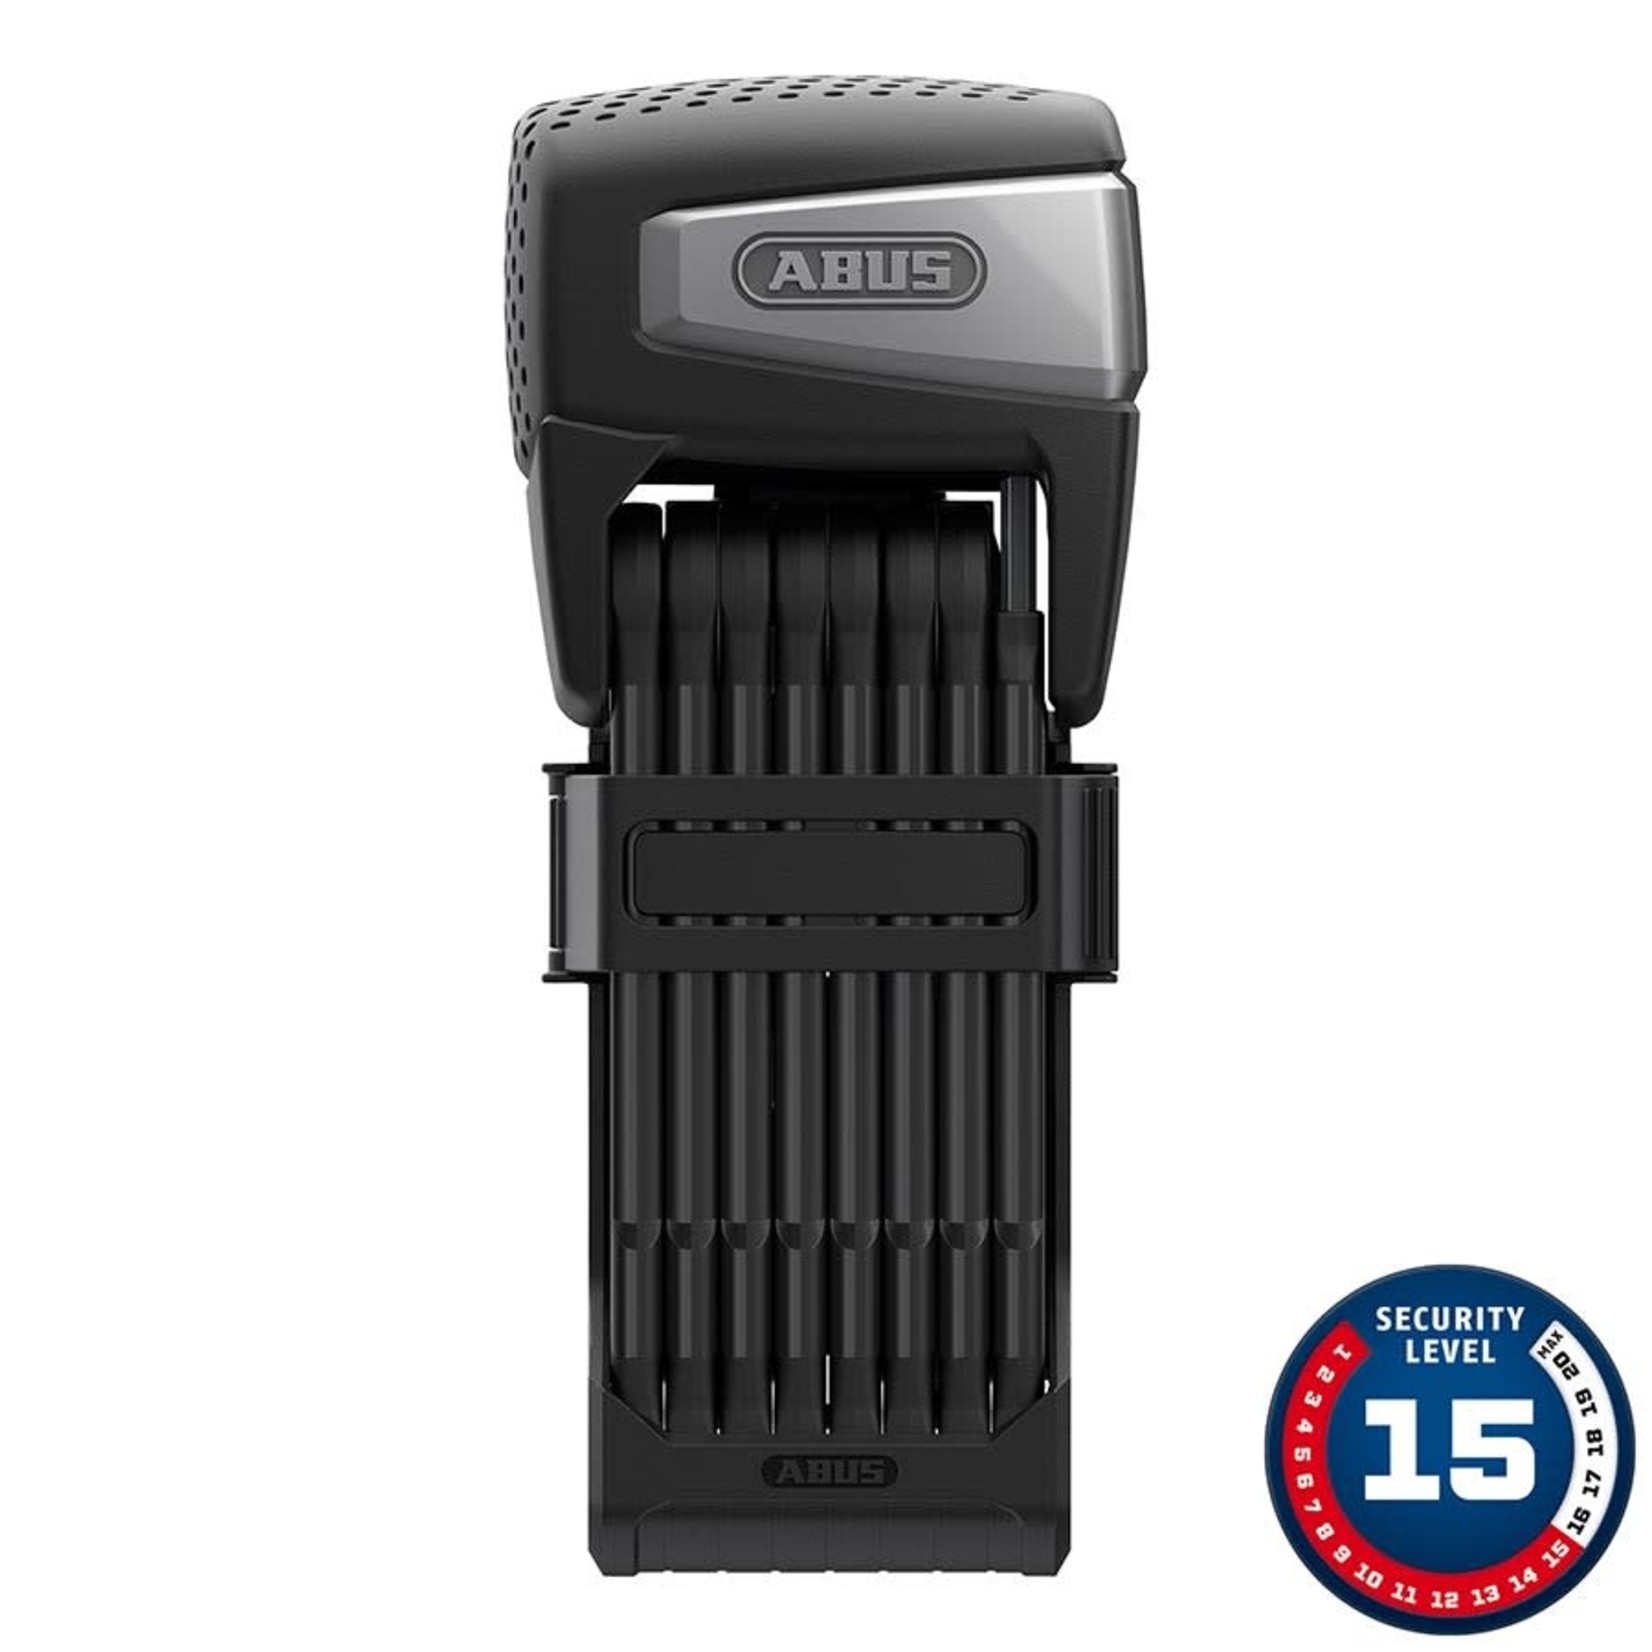 Abus Abus, Bordo Smart X 6500A, Folding Lock, Smart, 110cm, 5mm, Black, No remote, Requires phone app